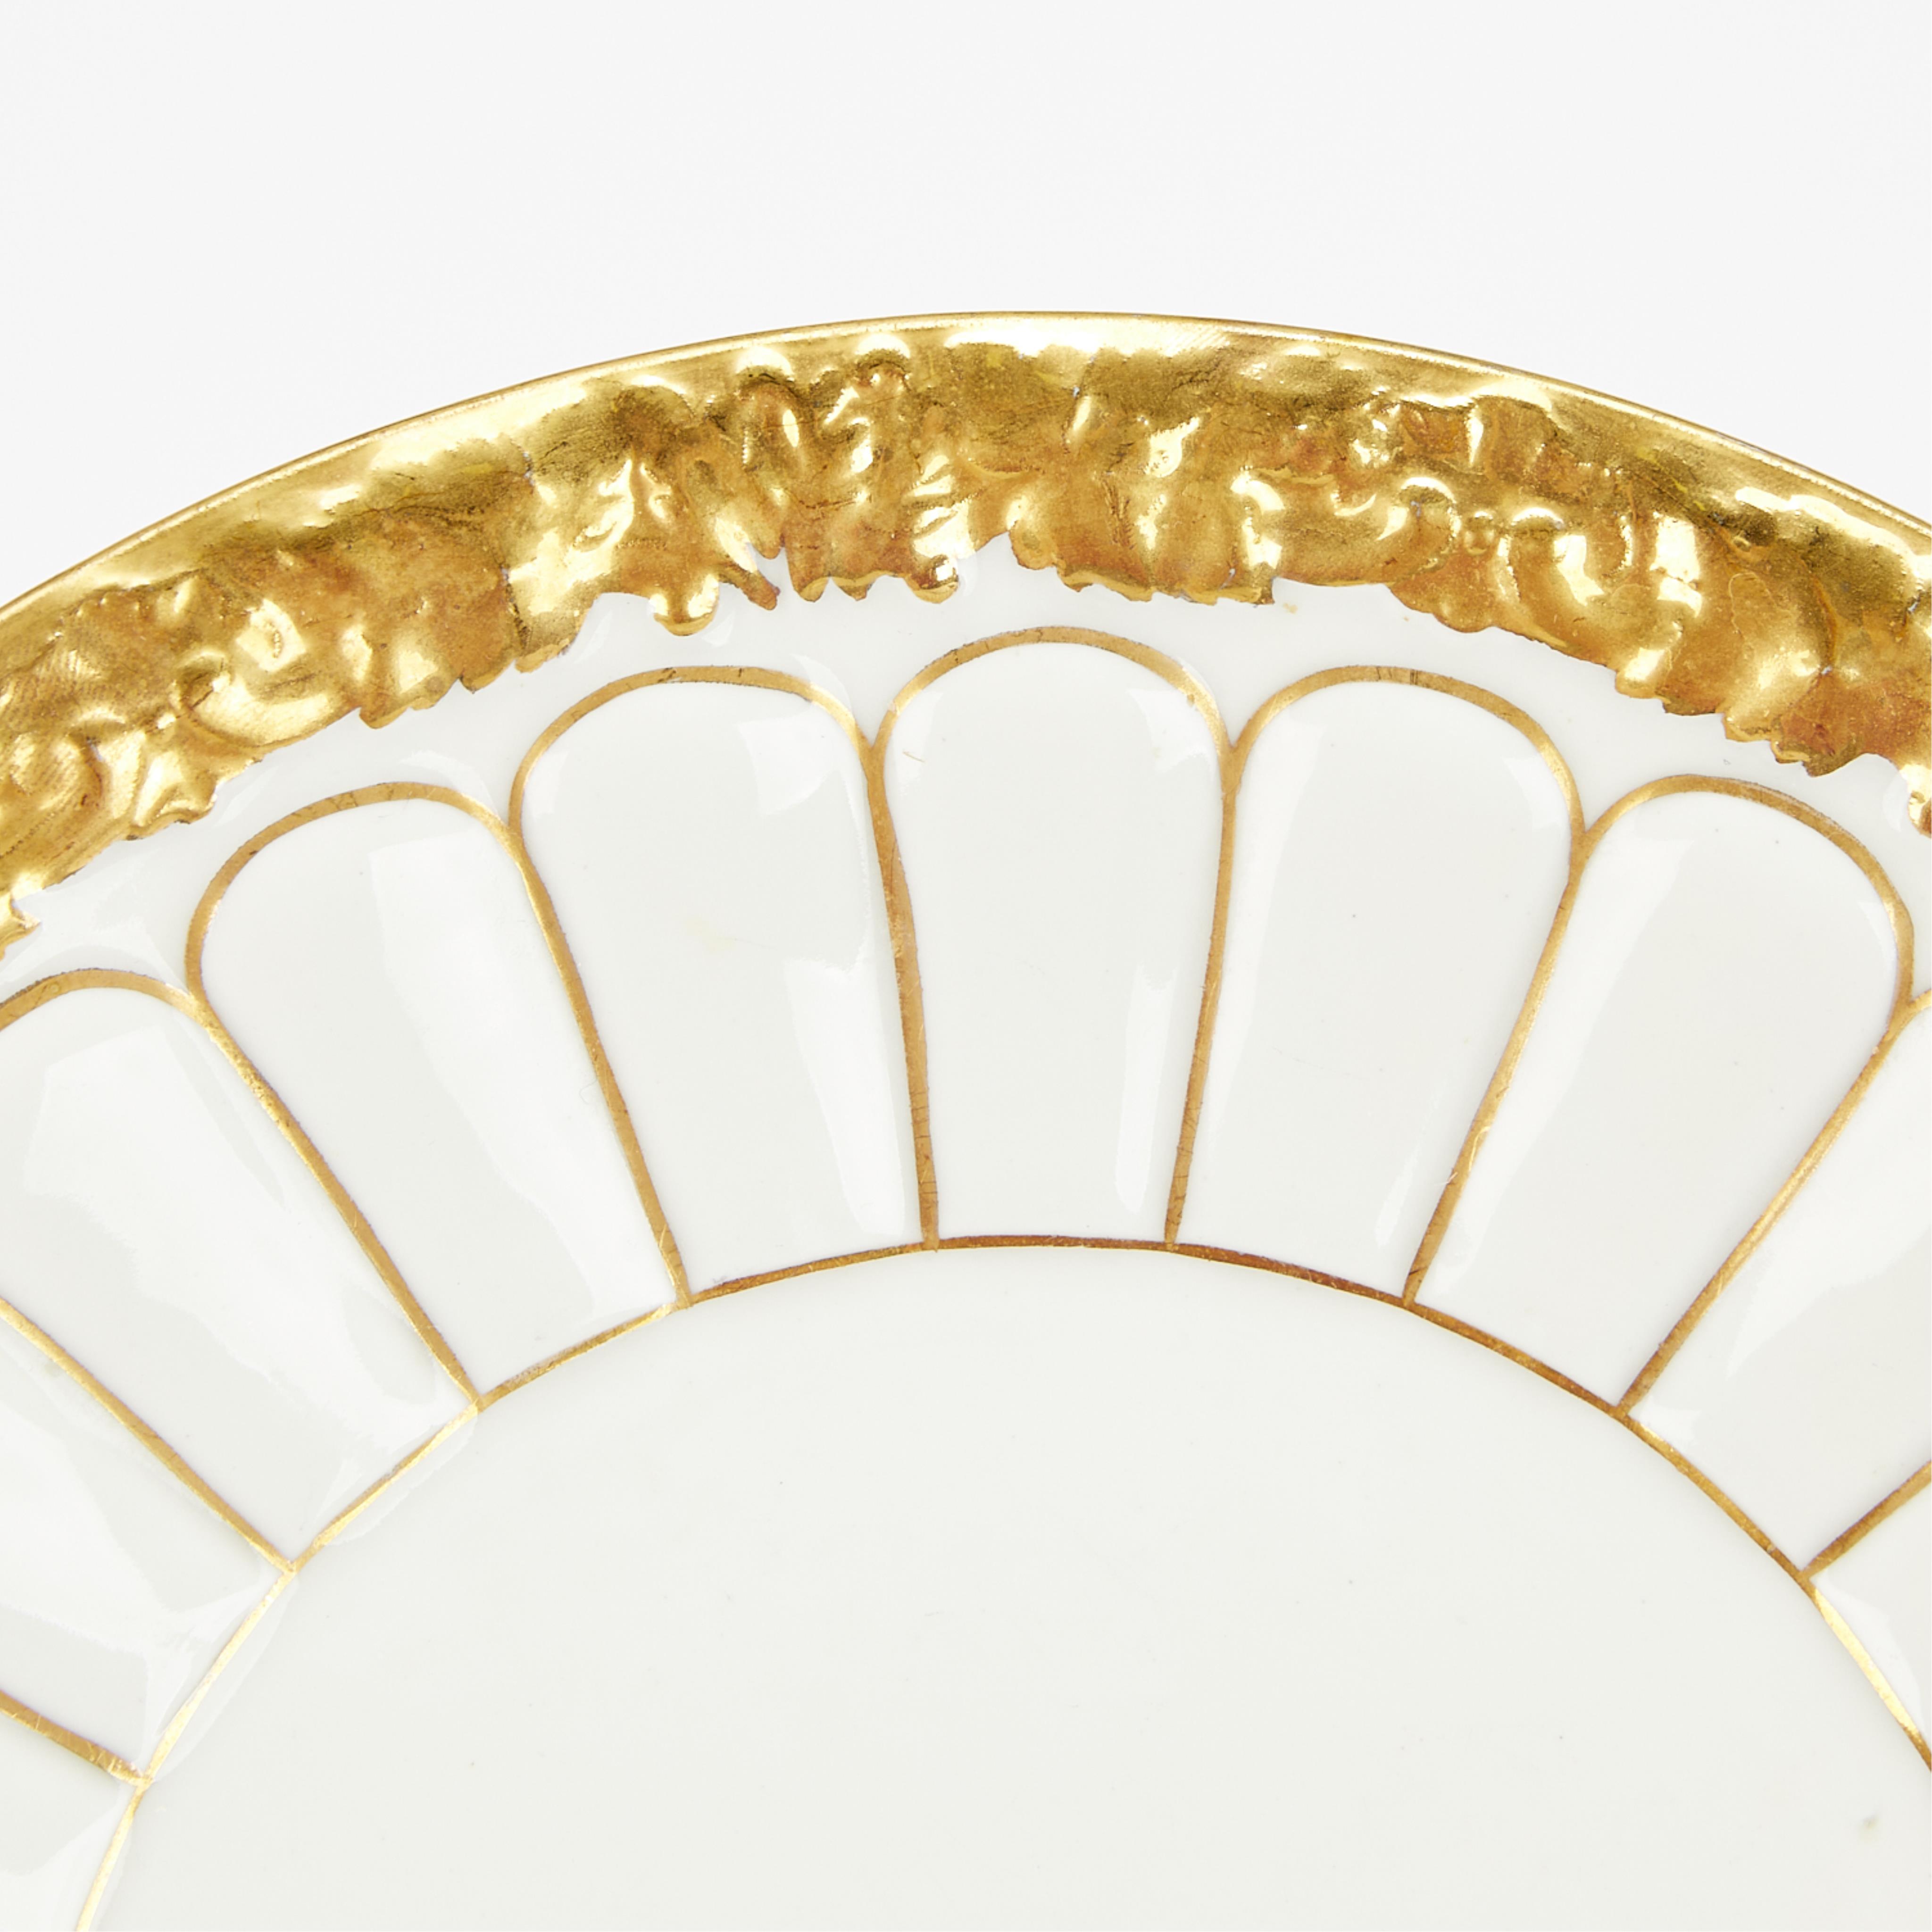 Set 4 Meissen Porcelain "Golden Baroque" Plates - Image 3 of 9